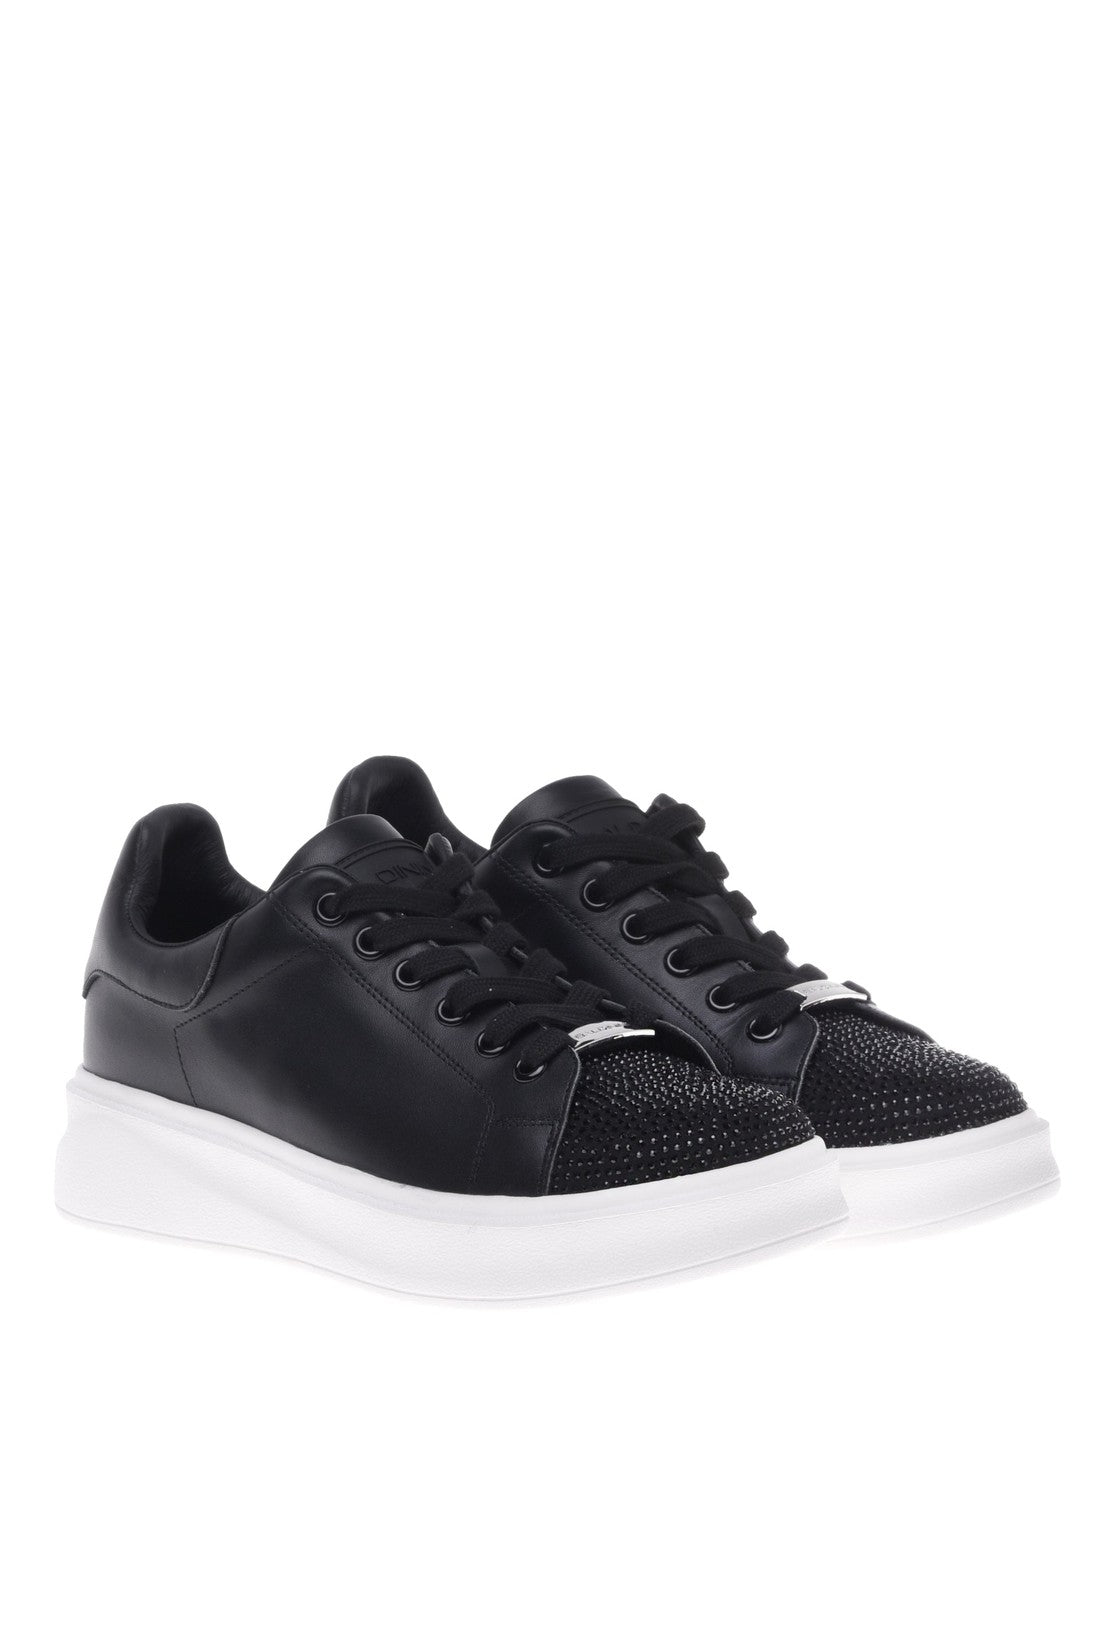 BALDININI-OUTLET-SALE-Sneaker-in-black-calfskin-with-rhinestones-Sneaker-ARCHIVE-COLLECTION-3_e9349d05-6d53-4c08-86e8-0f686956b2f2.jpg